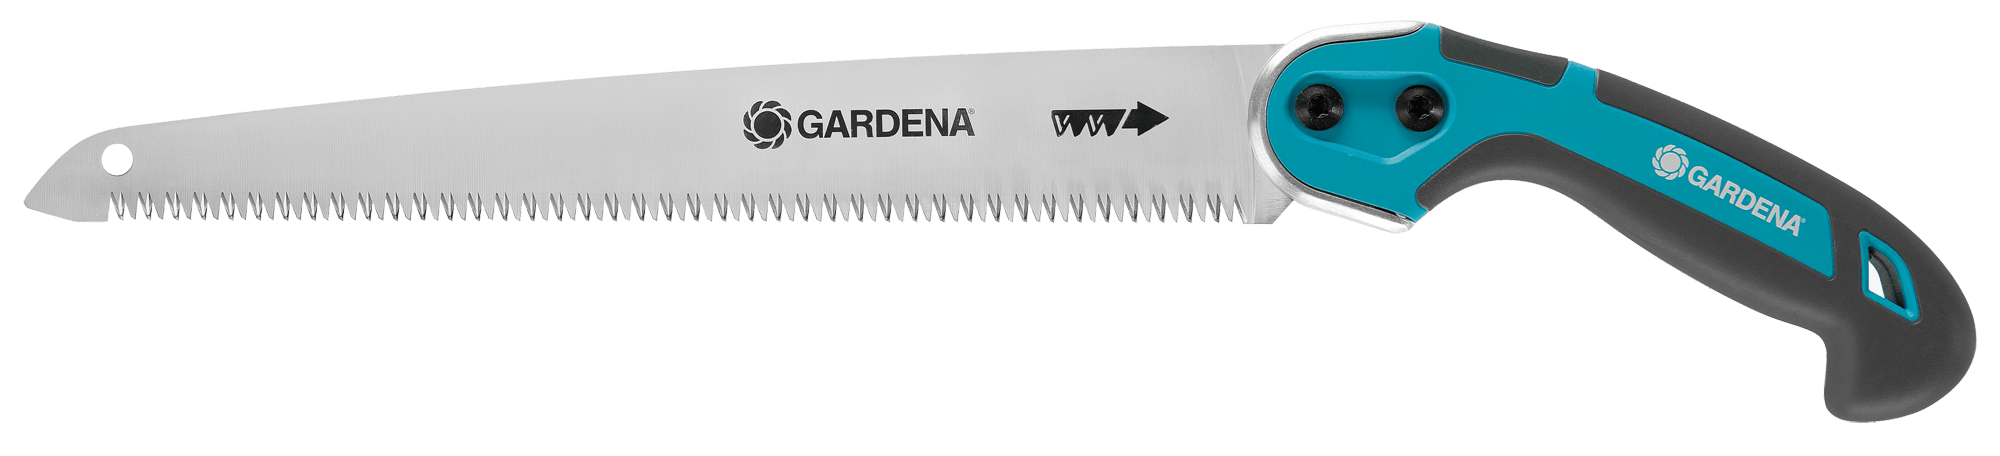 https://www.warentuin.nl/media/catalog/product/1/7/1774078500874502_gardena_garden_saws_snoeizaag_300_p__1_f1ae.png